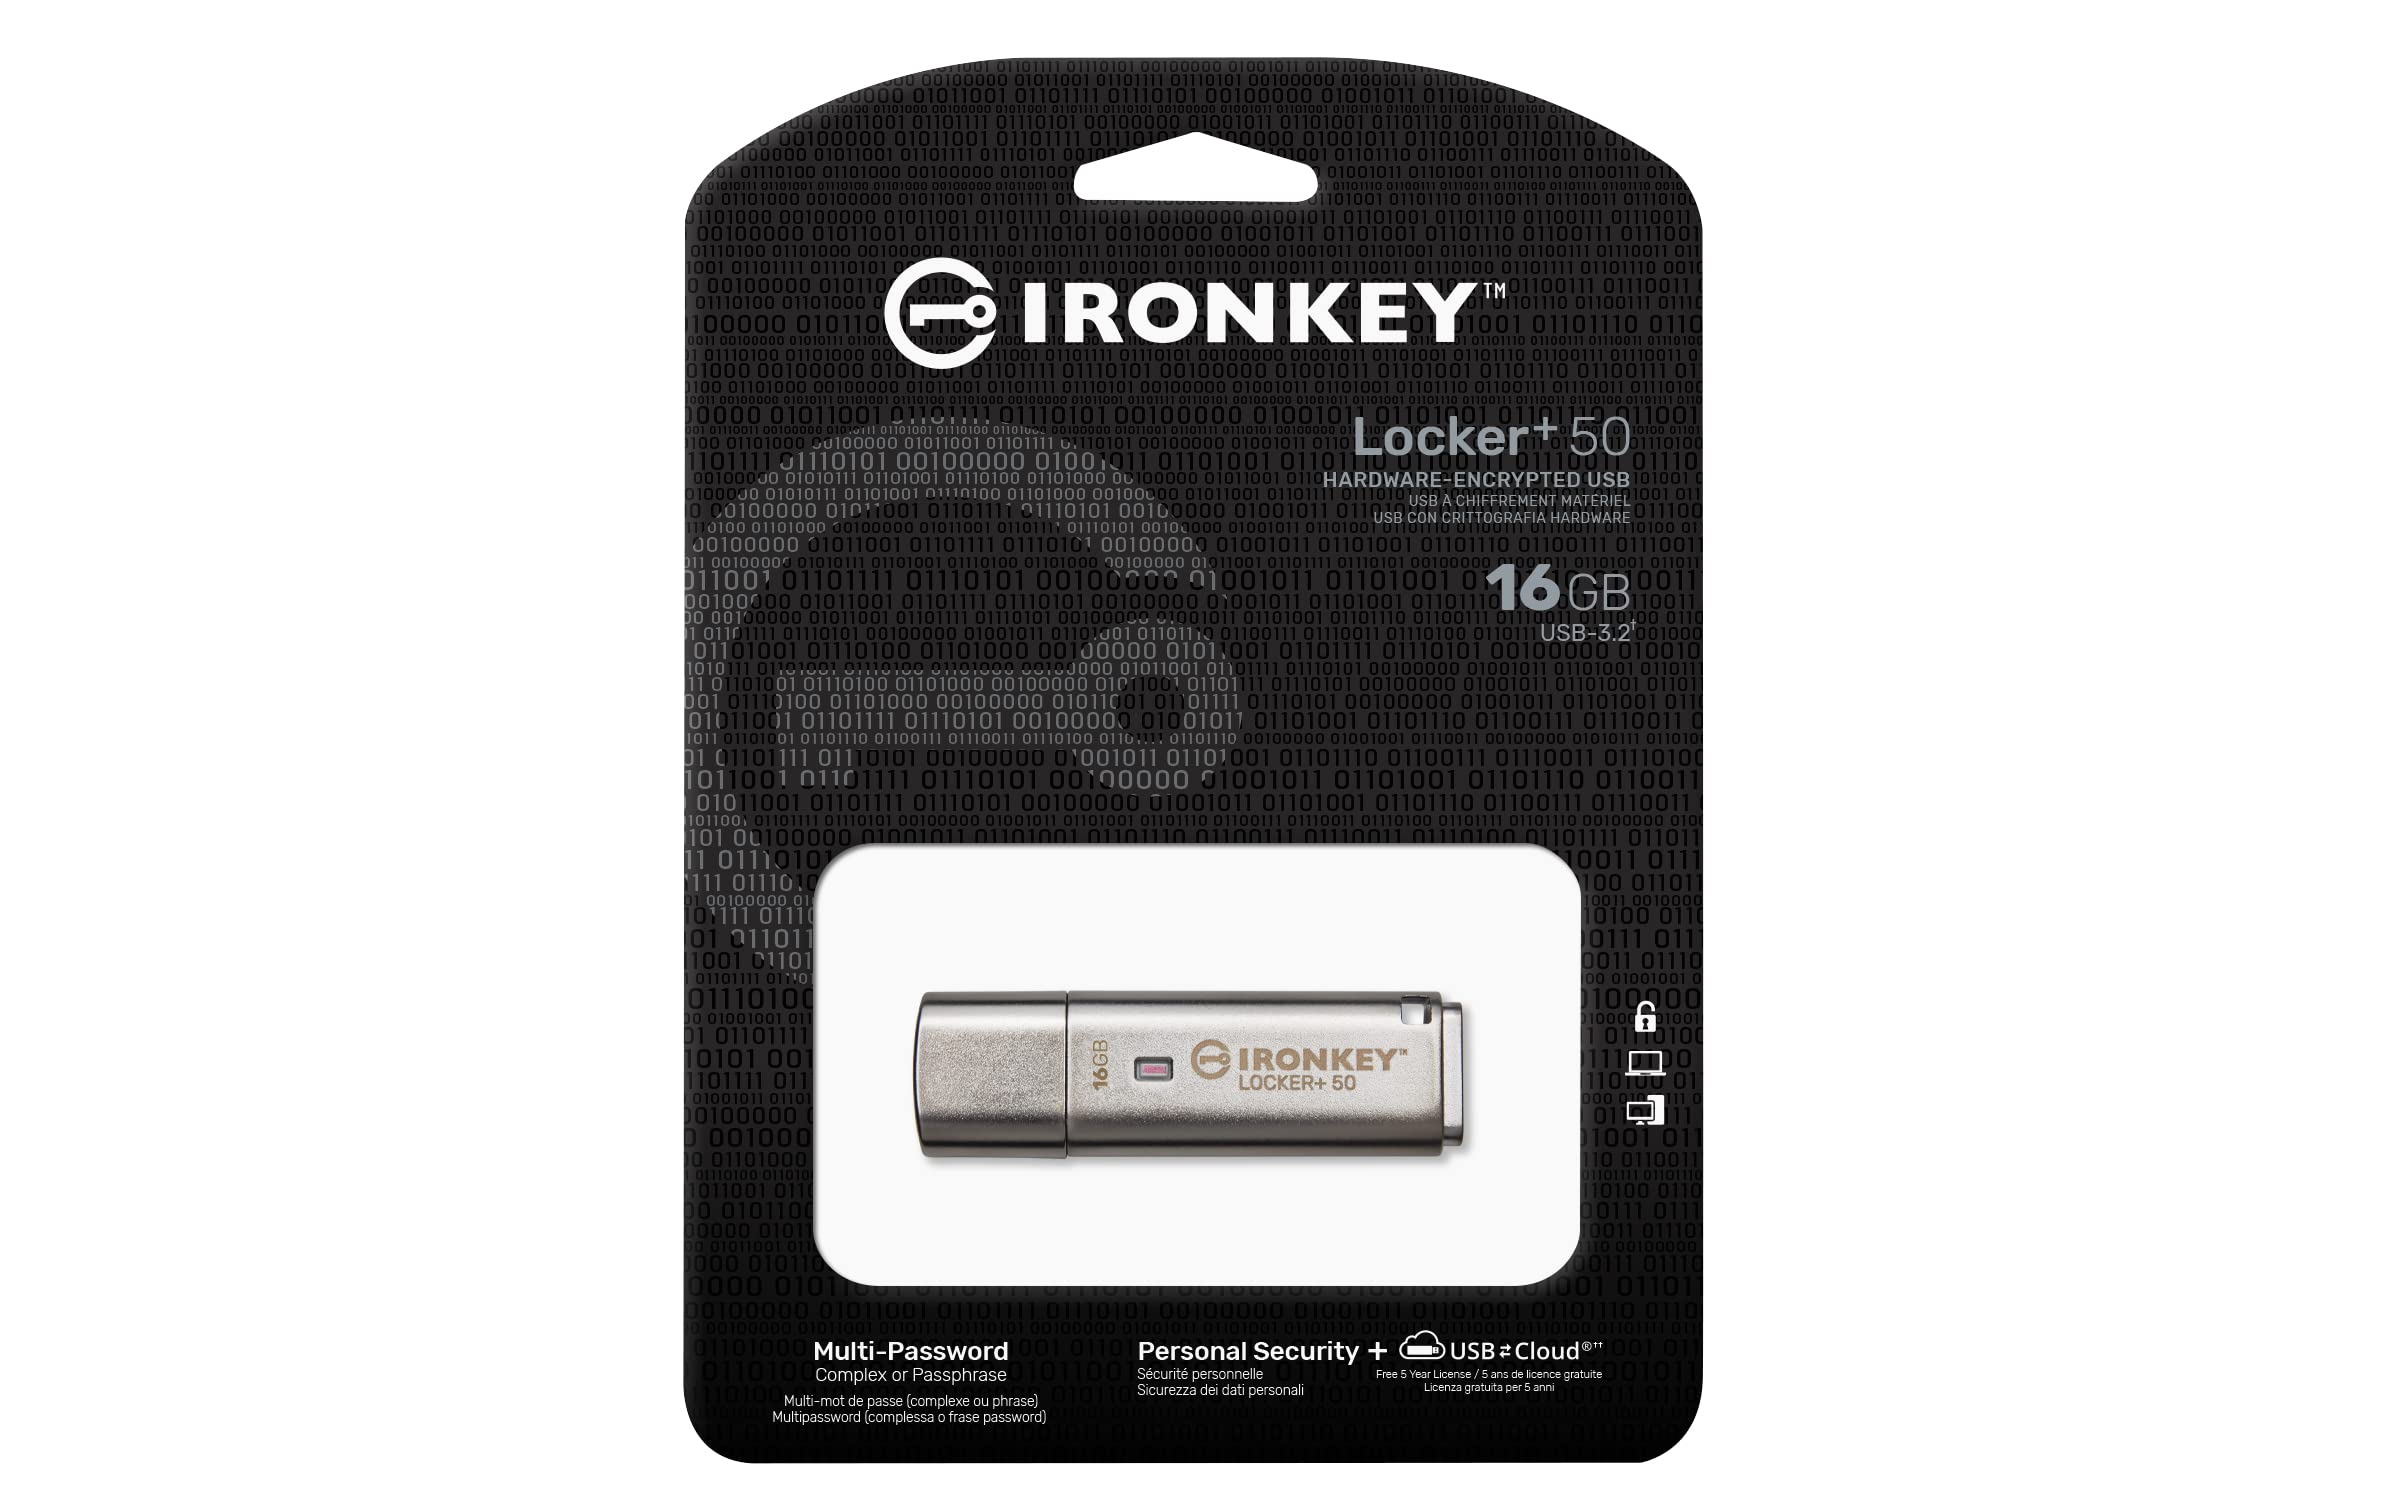 Kingston Ironkey Locker+ 50 16GB Encrypted USB Flash Drive | USB 3.2 Gen 1 | XTS-AES Protection | Multi-Password Security Options | Automatic Cloud Backup | Metal Casing | IKLP50/16GB